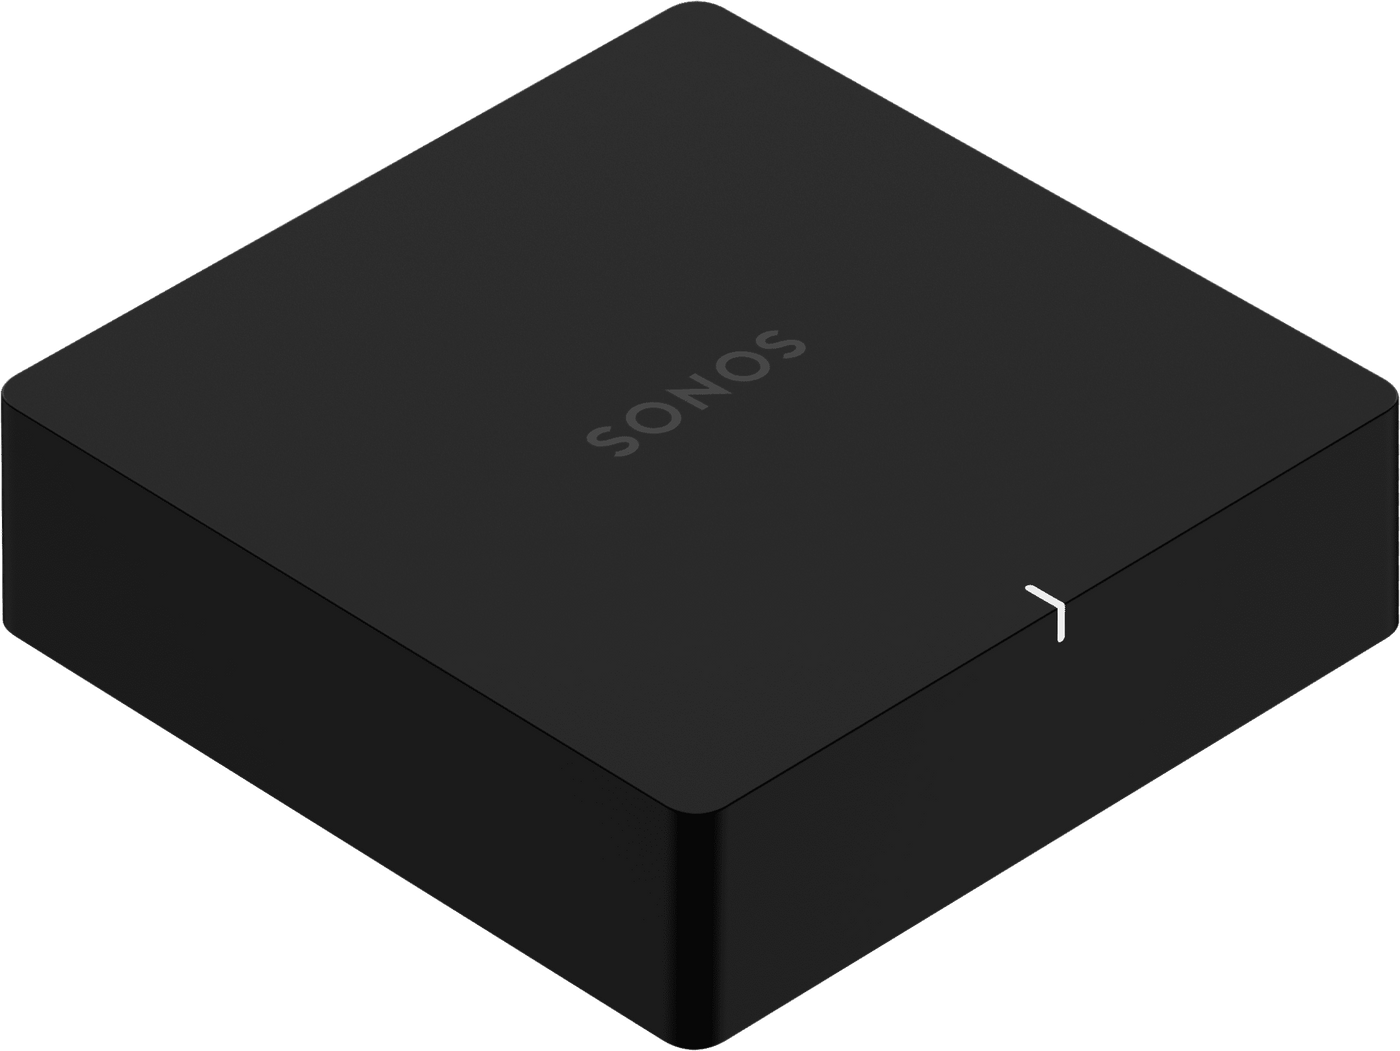 Sonos Port Music Streamer Network Audio Player